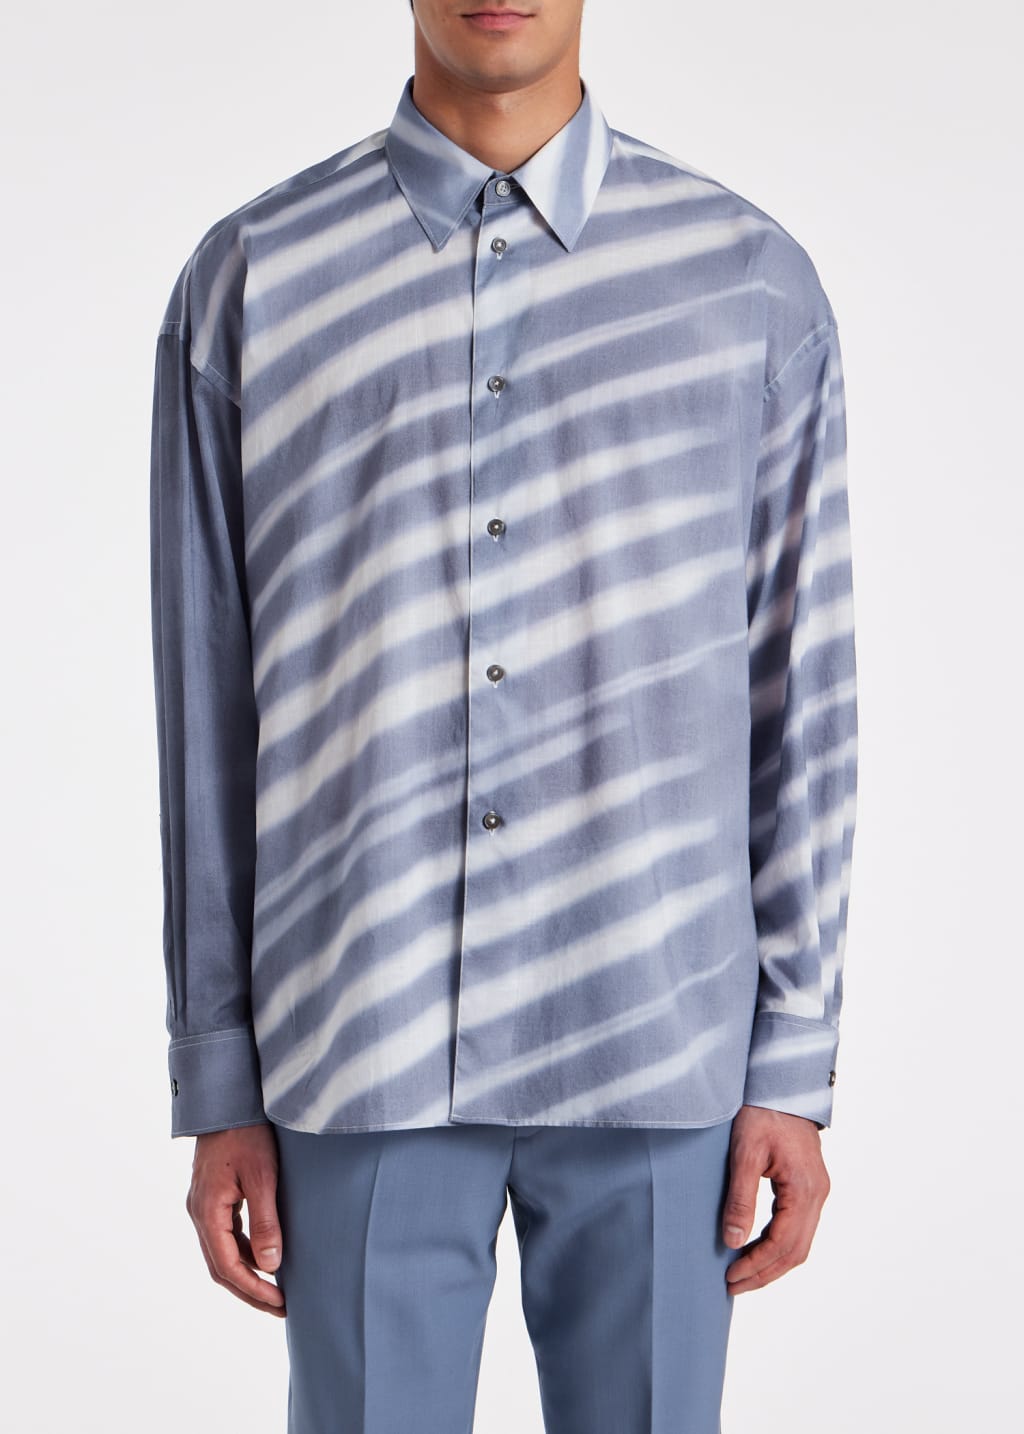 Model View - Blue 'Morning Light' Print Oversized Shirt Paul Smith